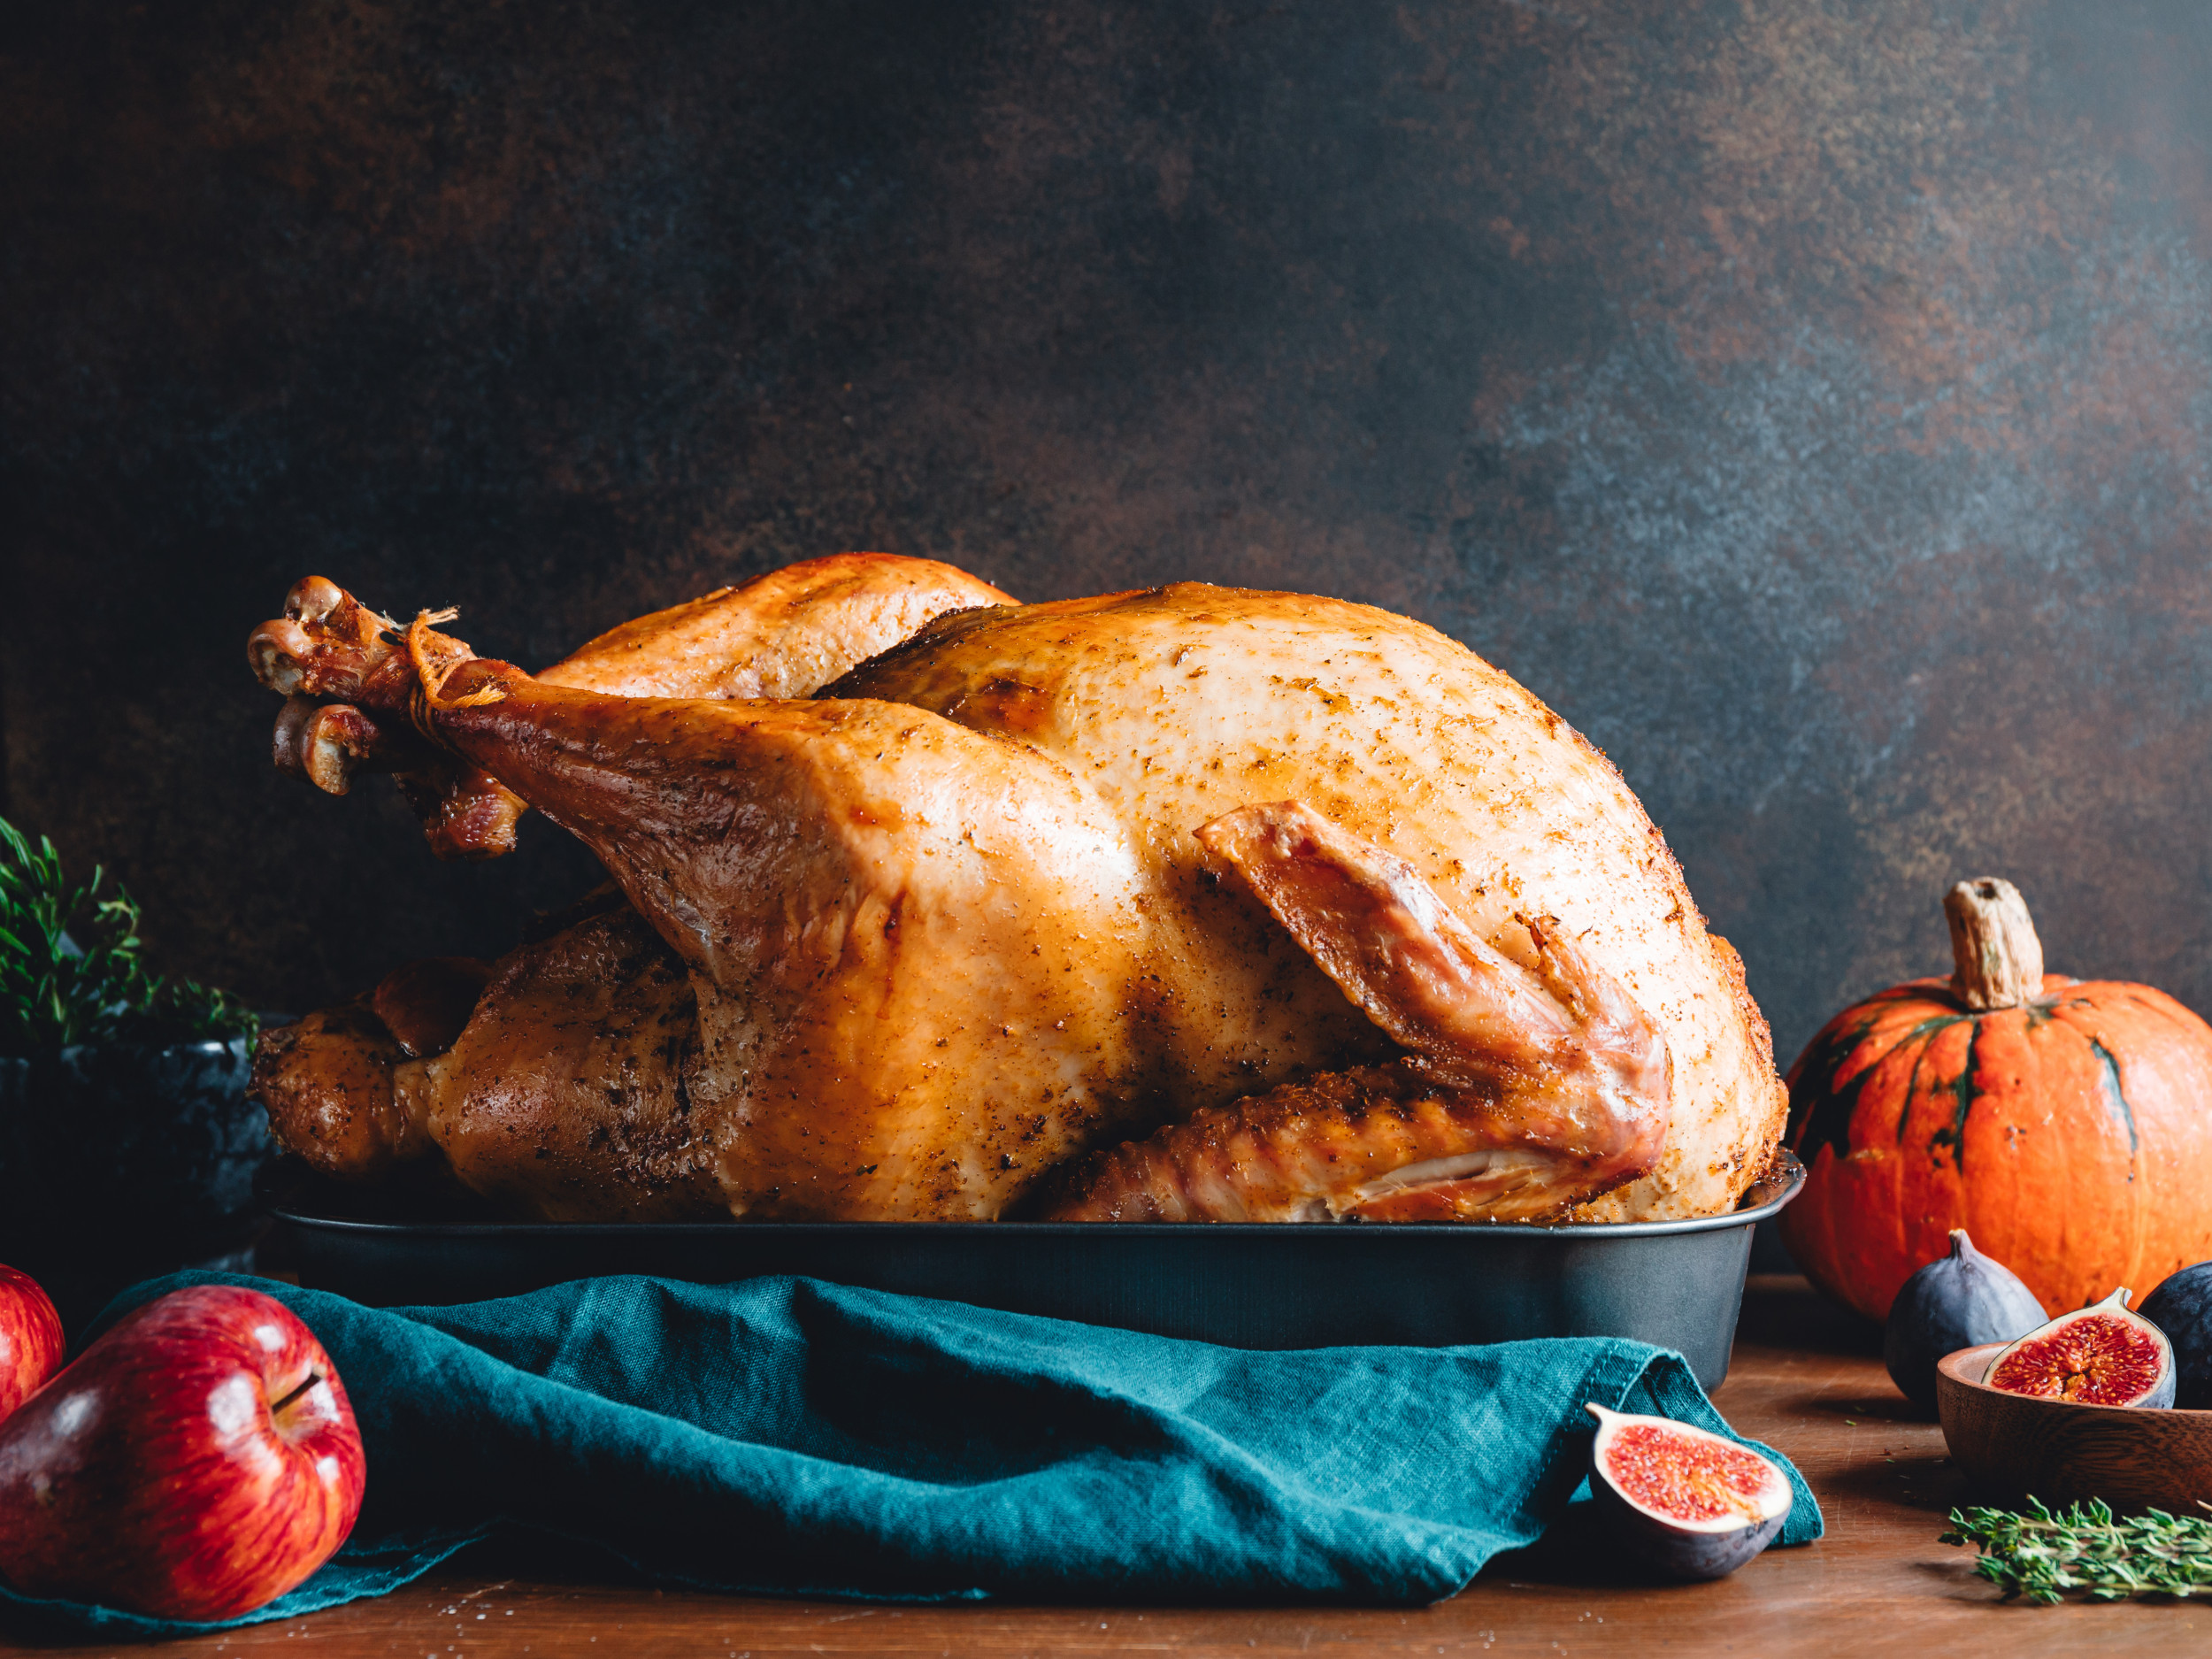 https://d.newsweek.com/en/full/1674666/how-long-should-you-cook-turkey.jpg